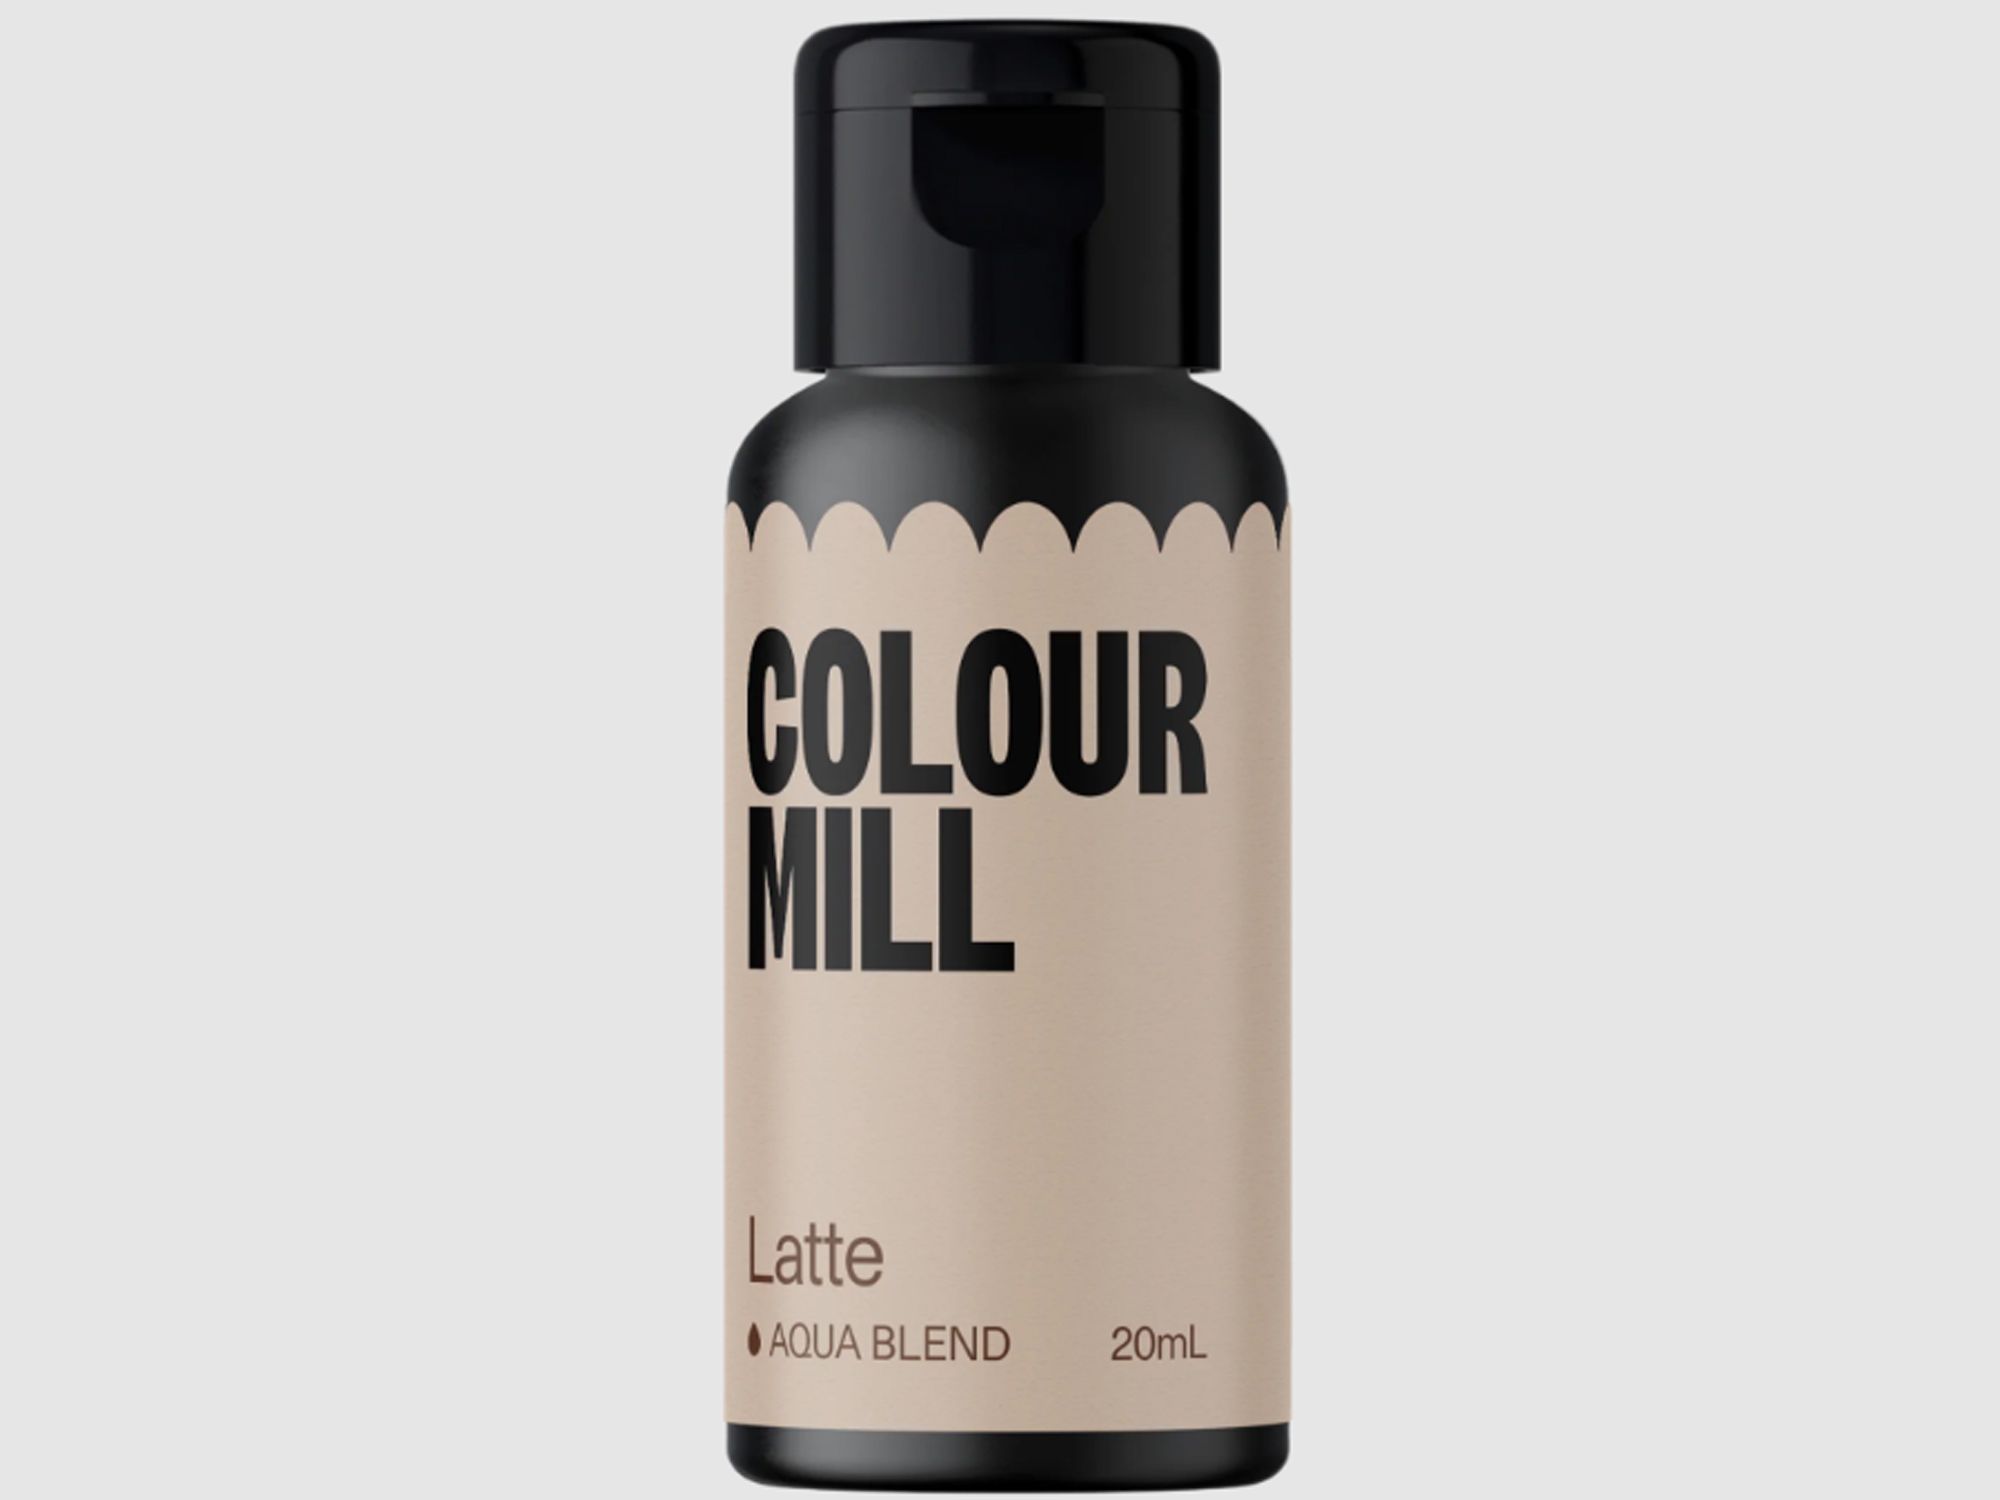 Colour Mill Latte (Aqua Blend) 20ml